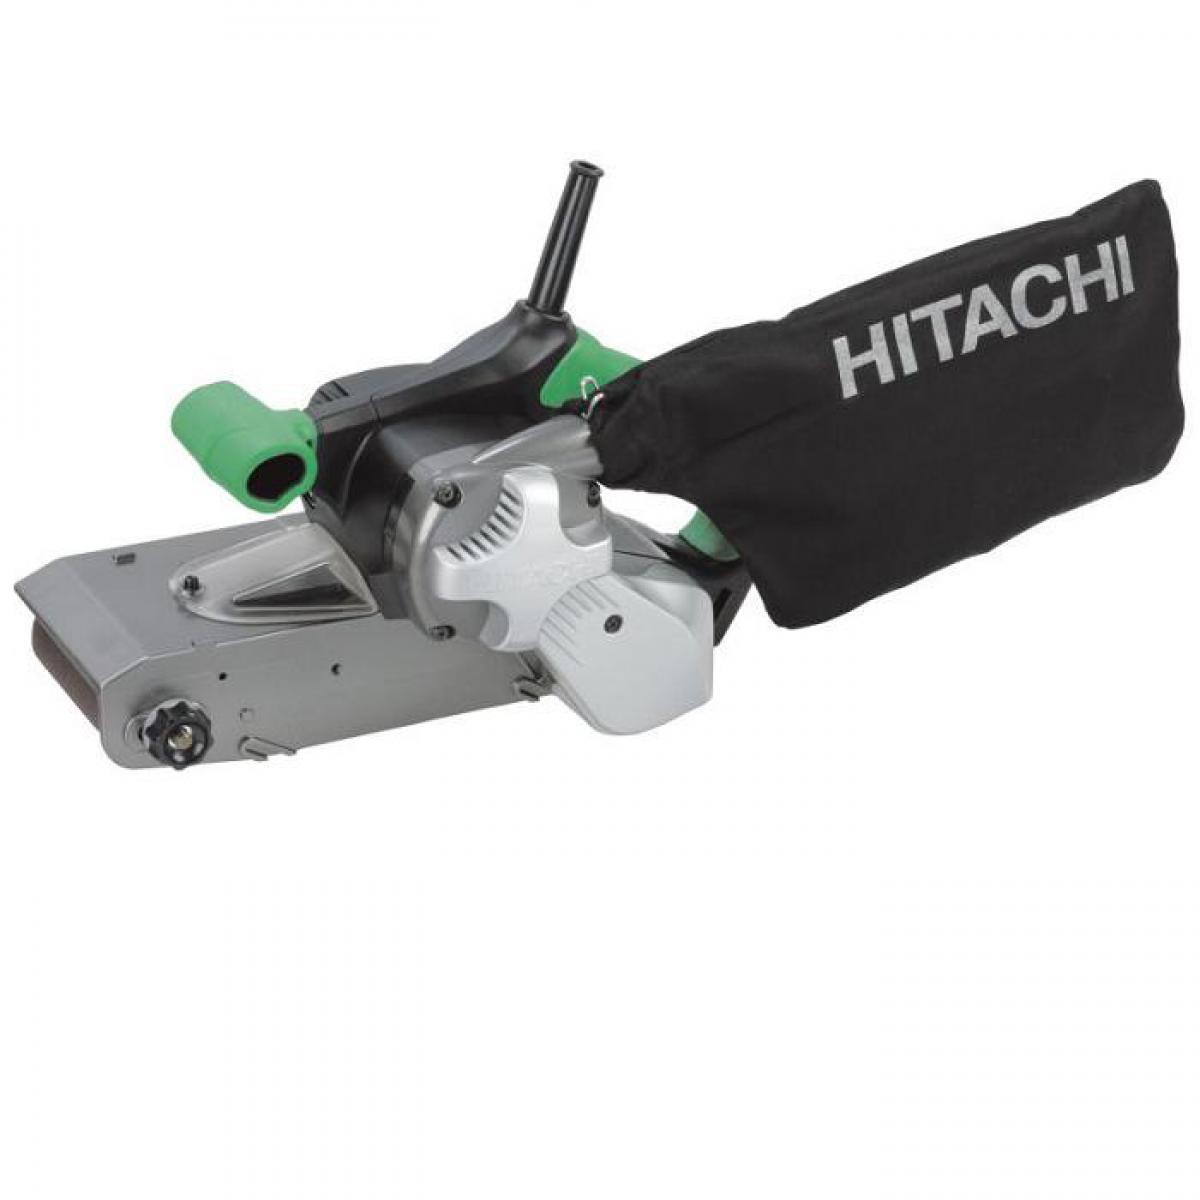 Hitachi - Hitachi - Hikoki– Ponceuse à bande (grandes surfaces) 100x610mm 1020W – SB10S2 - Ponceuses à bande